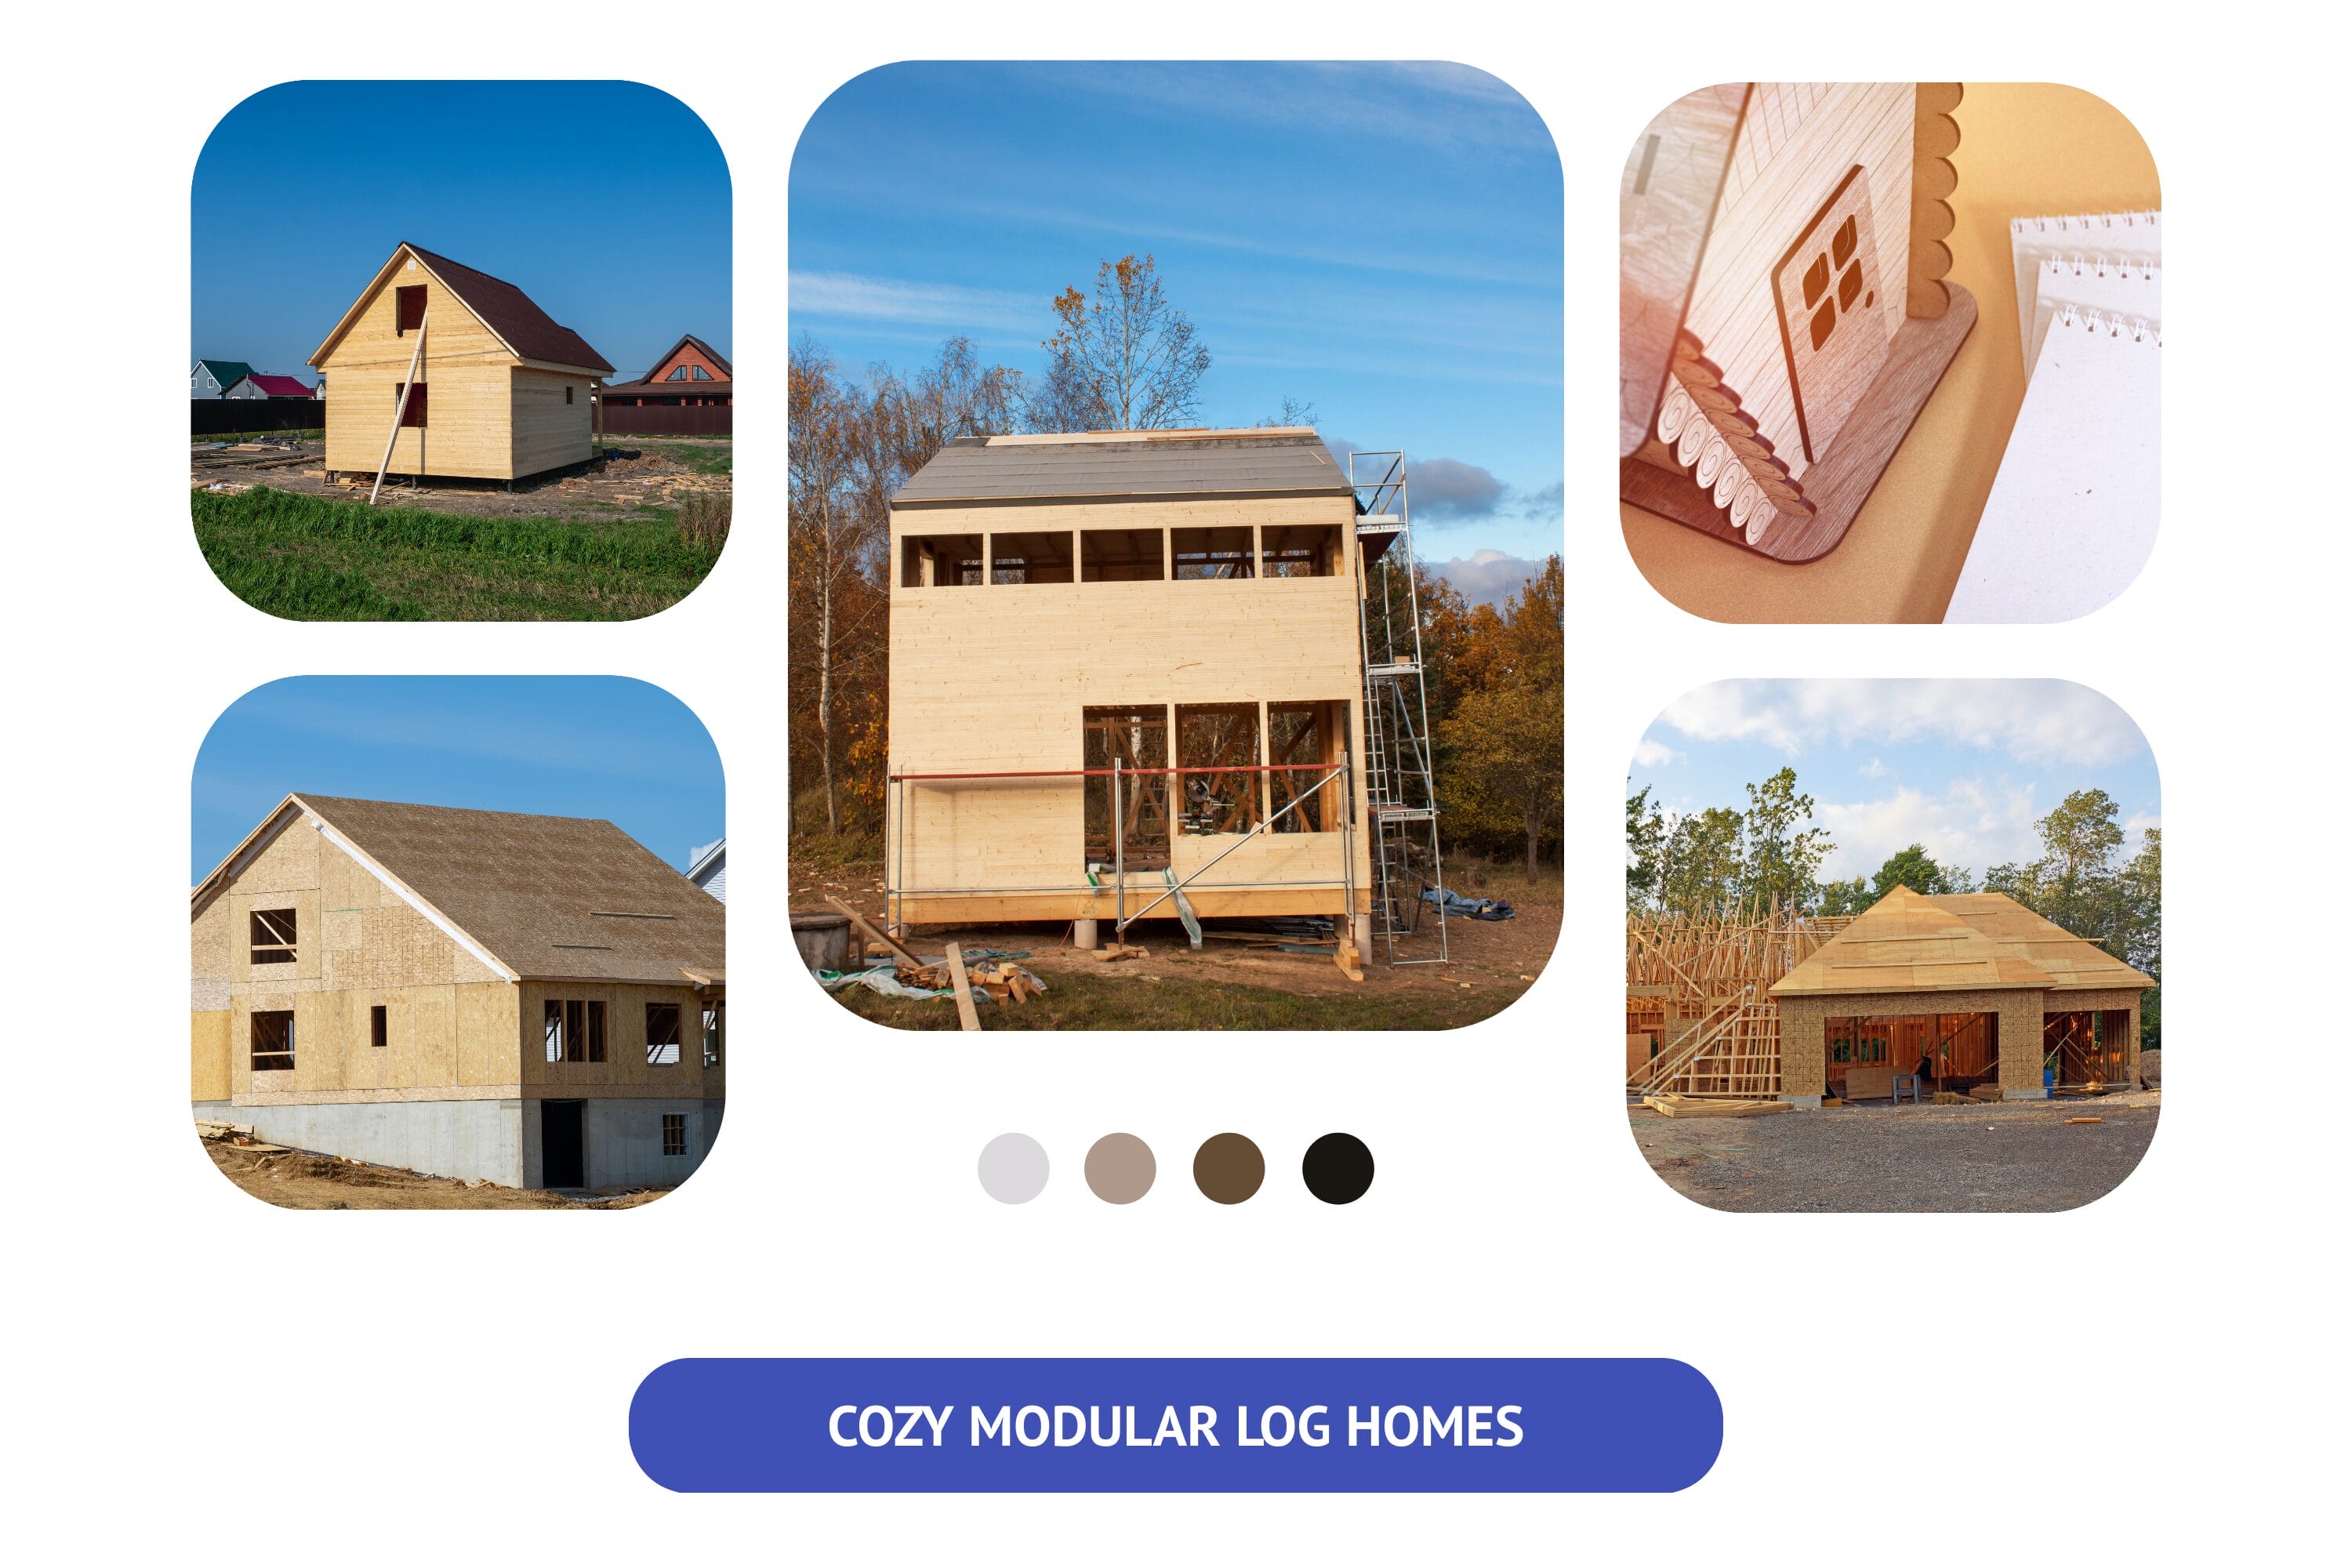 Ideas for modular log homes.